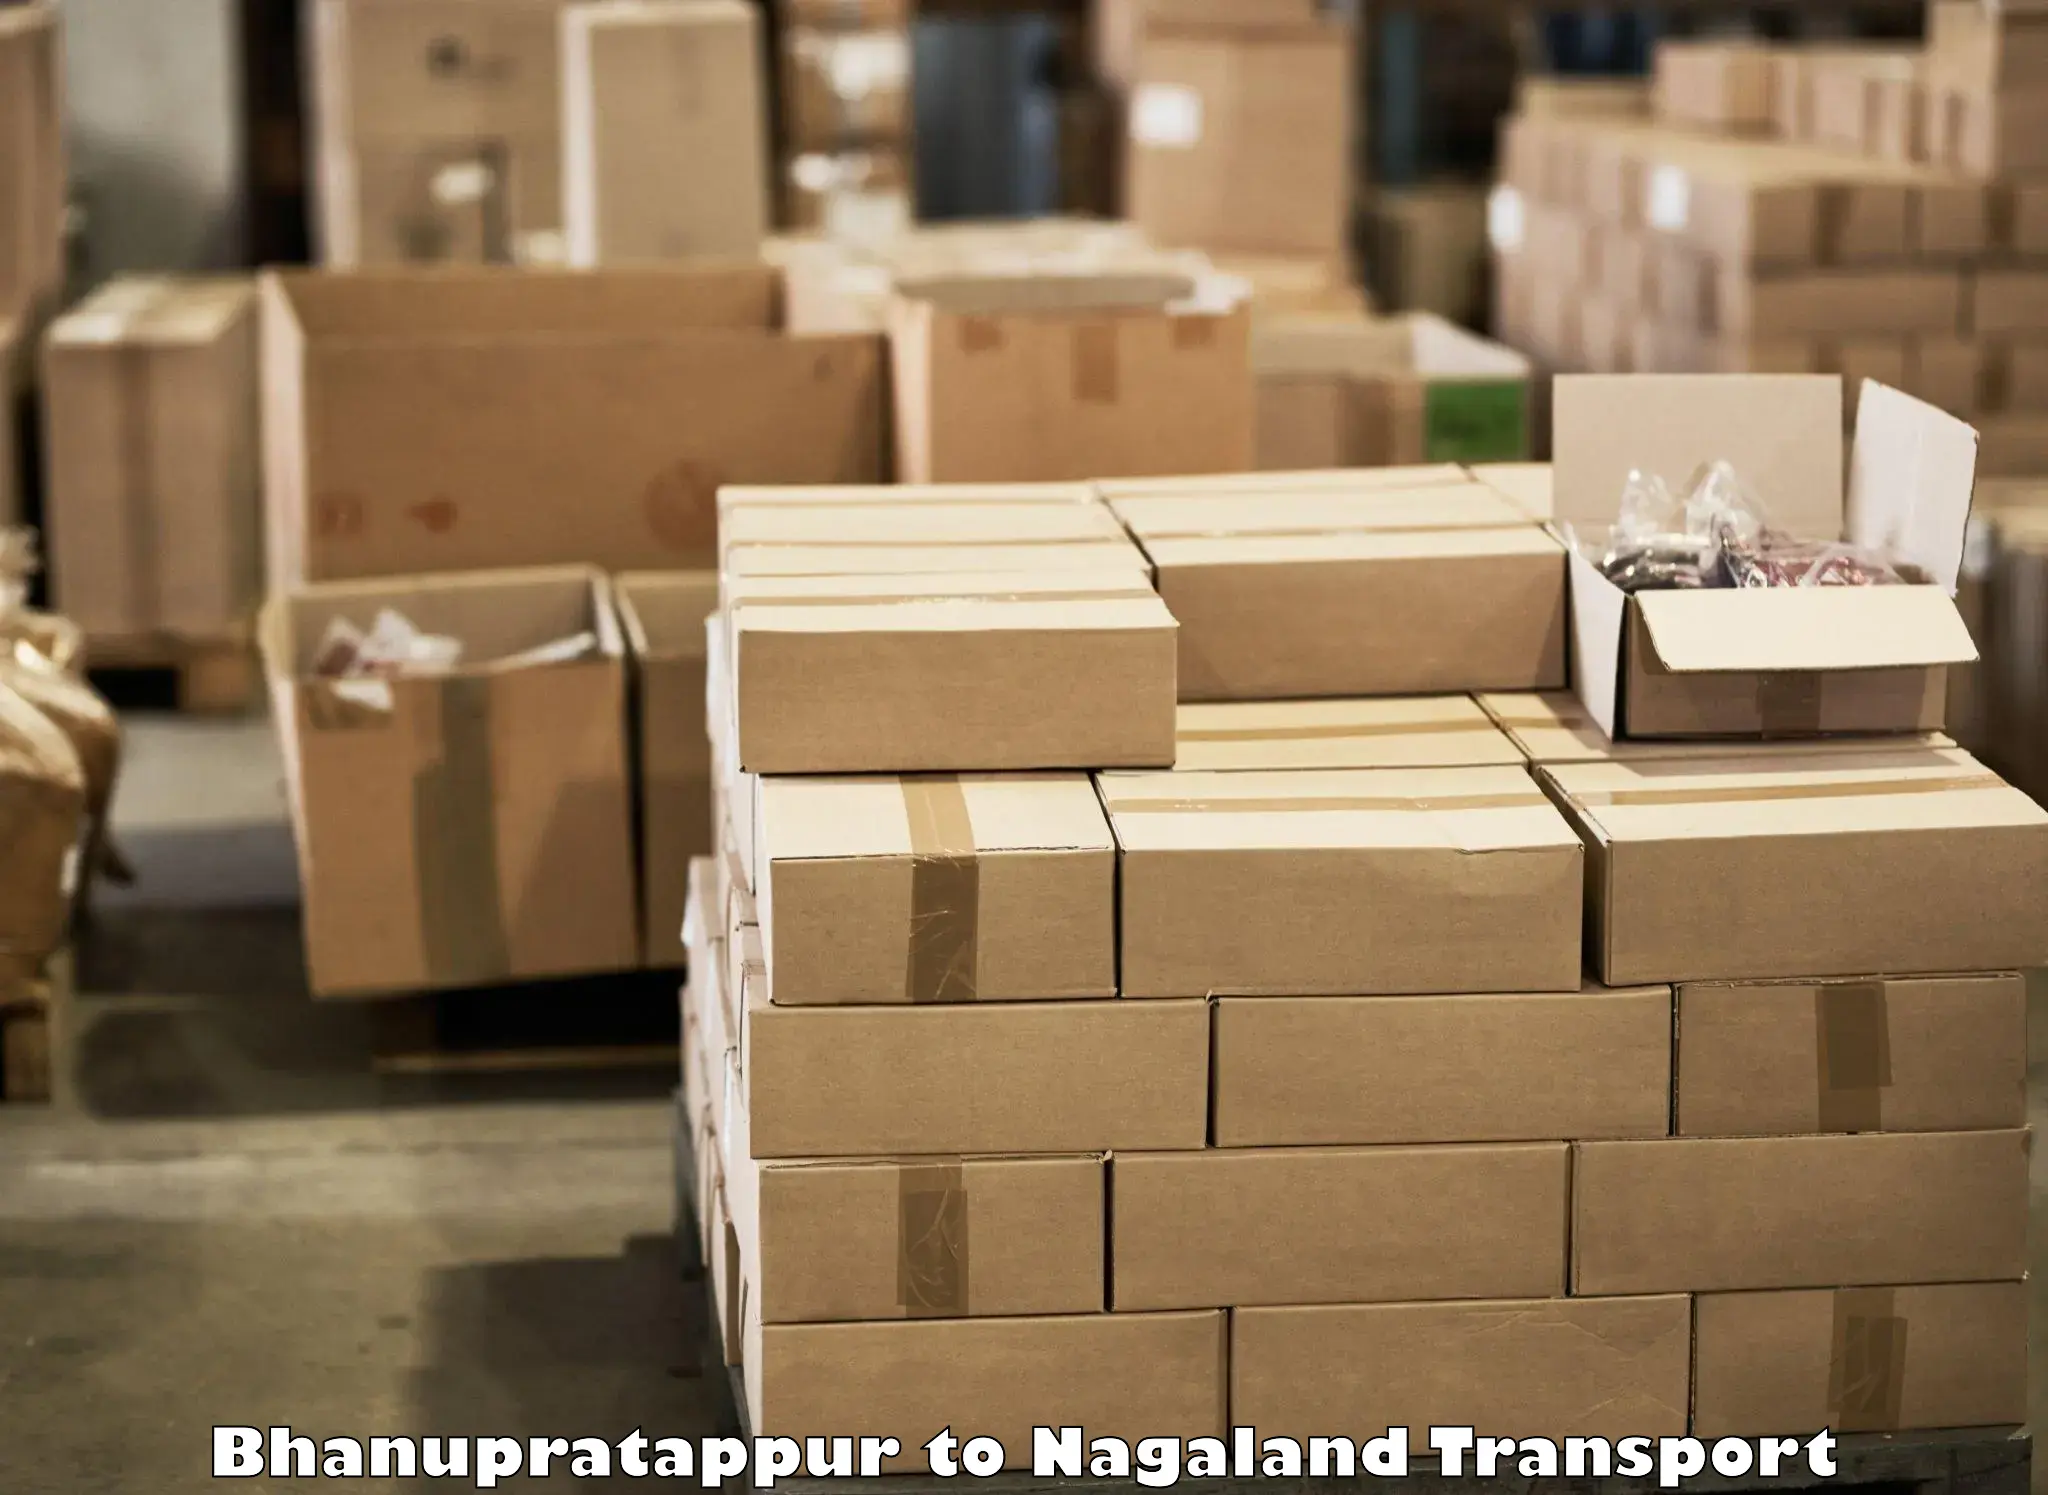 Truck transport companies in India Bhanupratappur to Mon